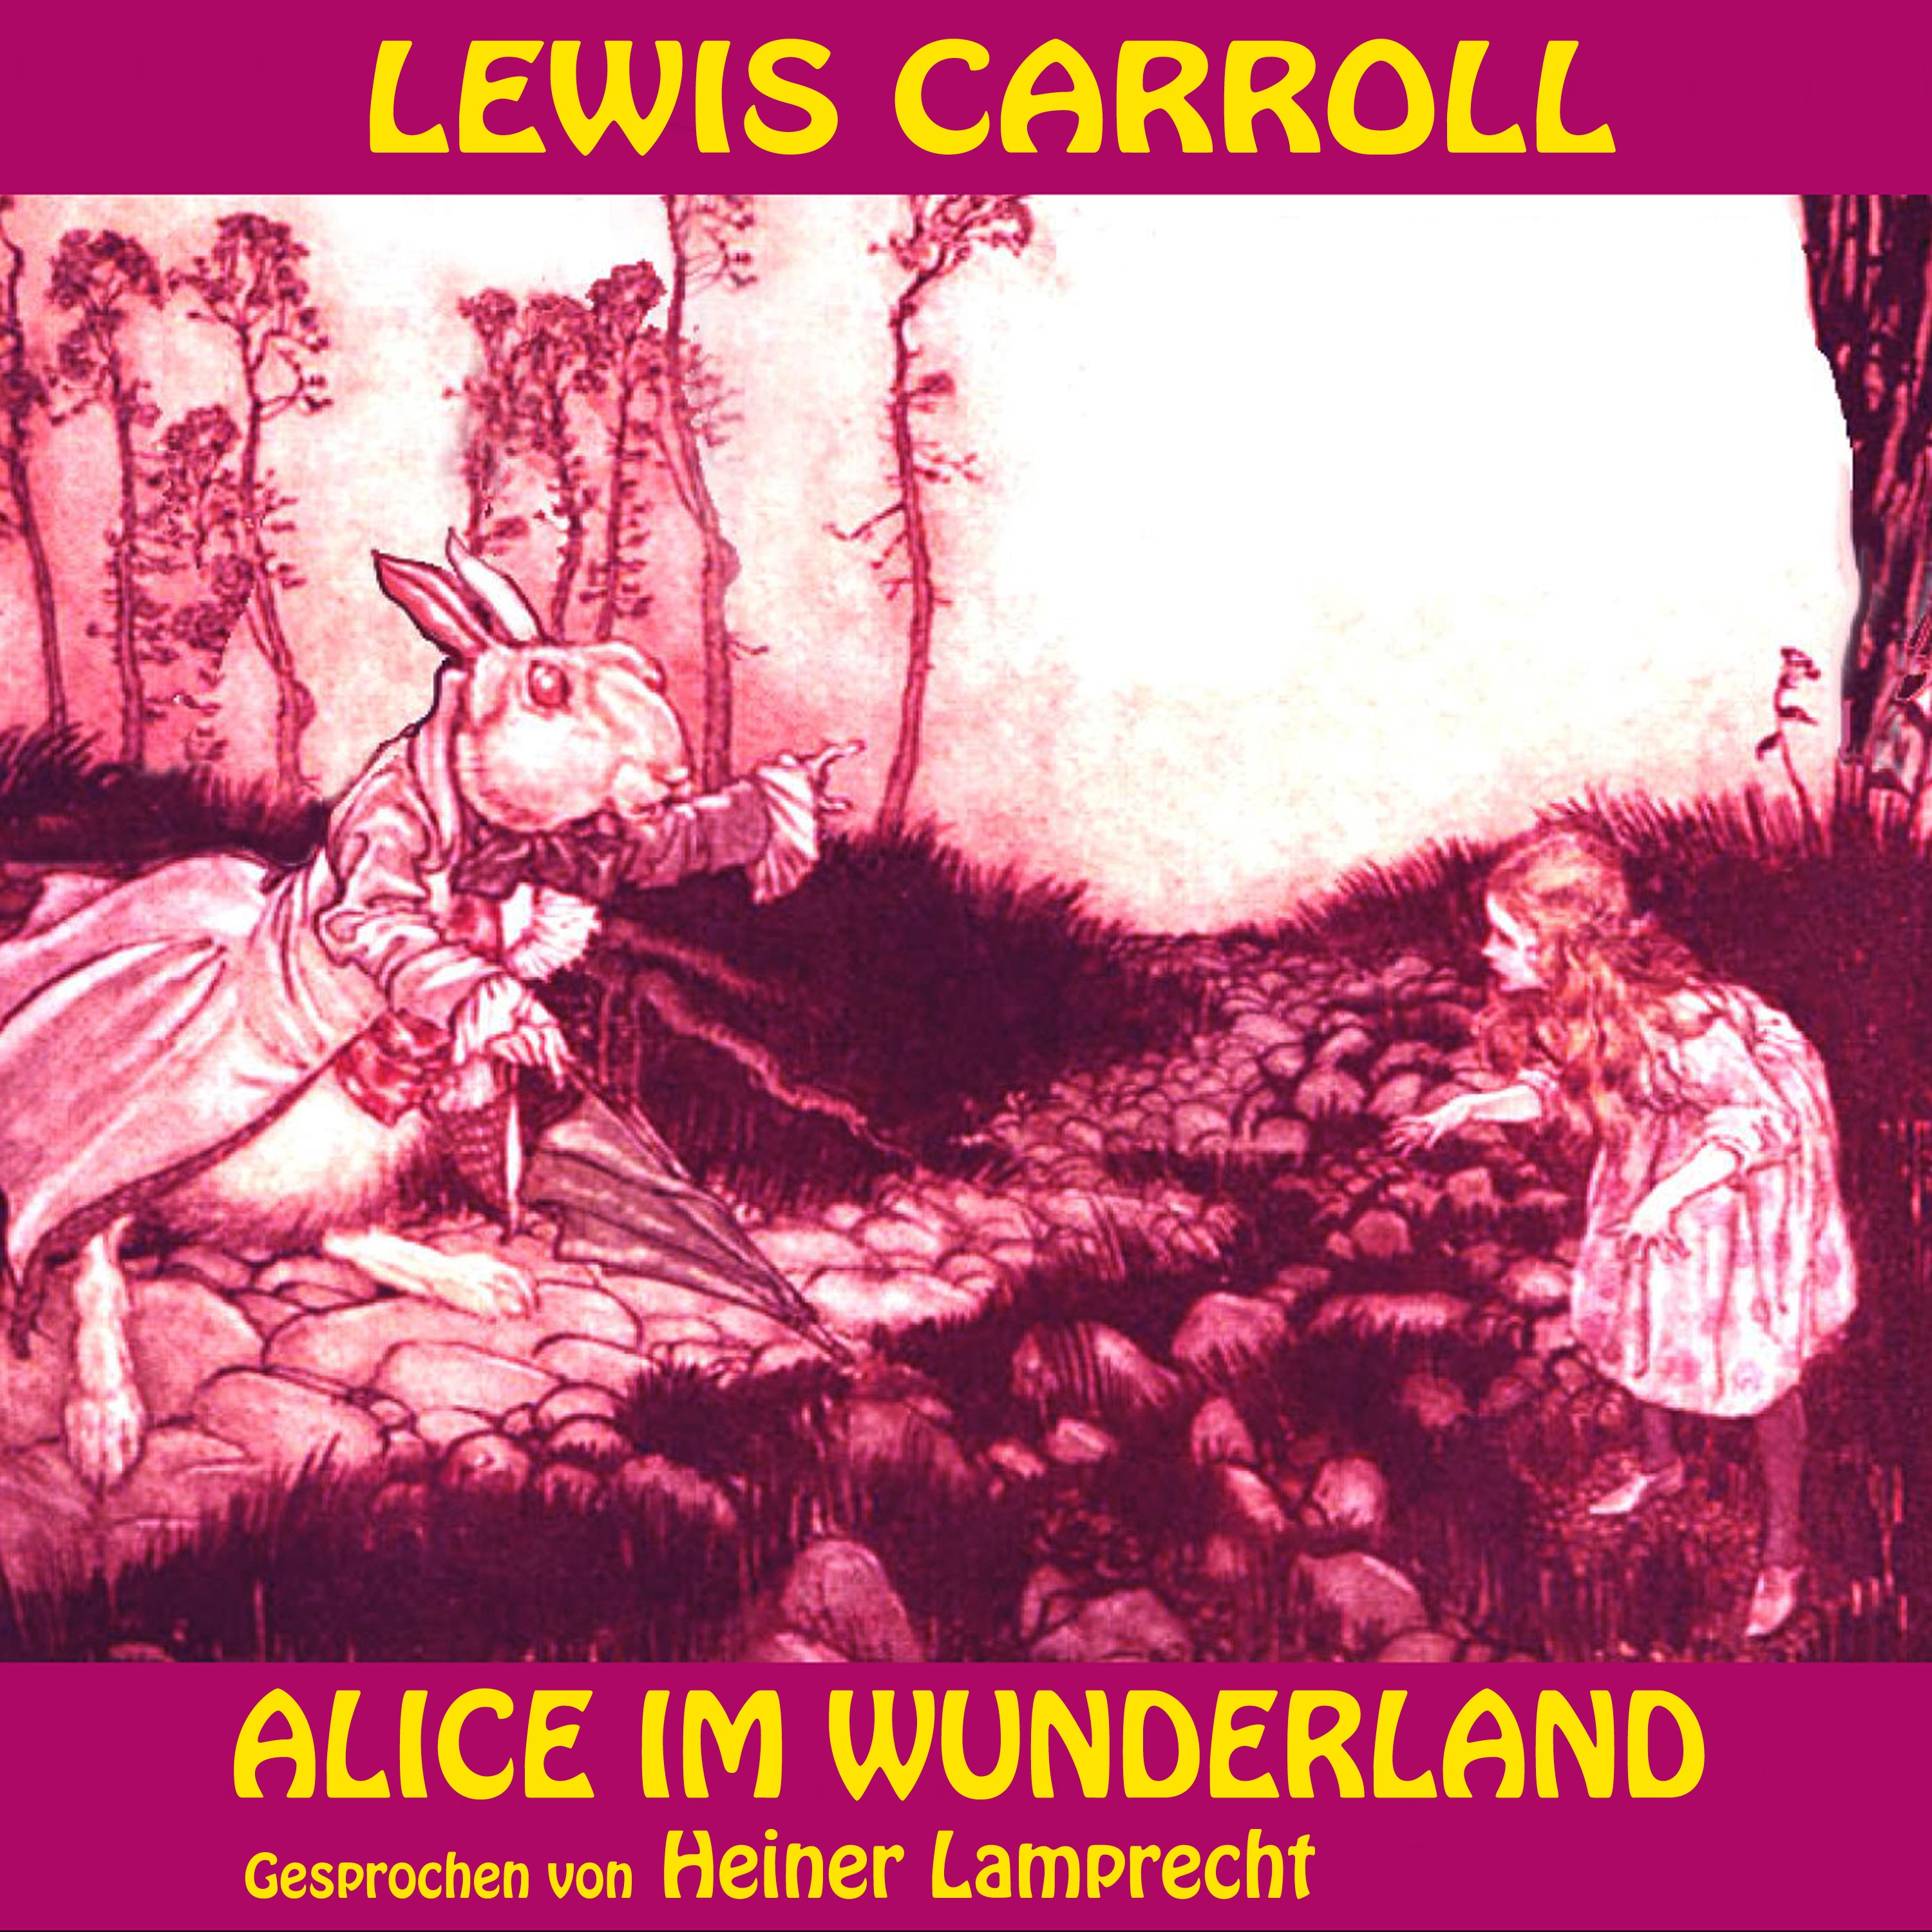 Kapitel 9: Alice im Wunderland (Teil 9)